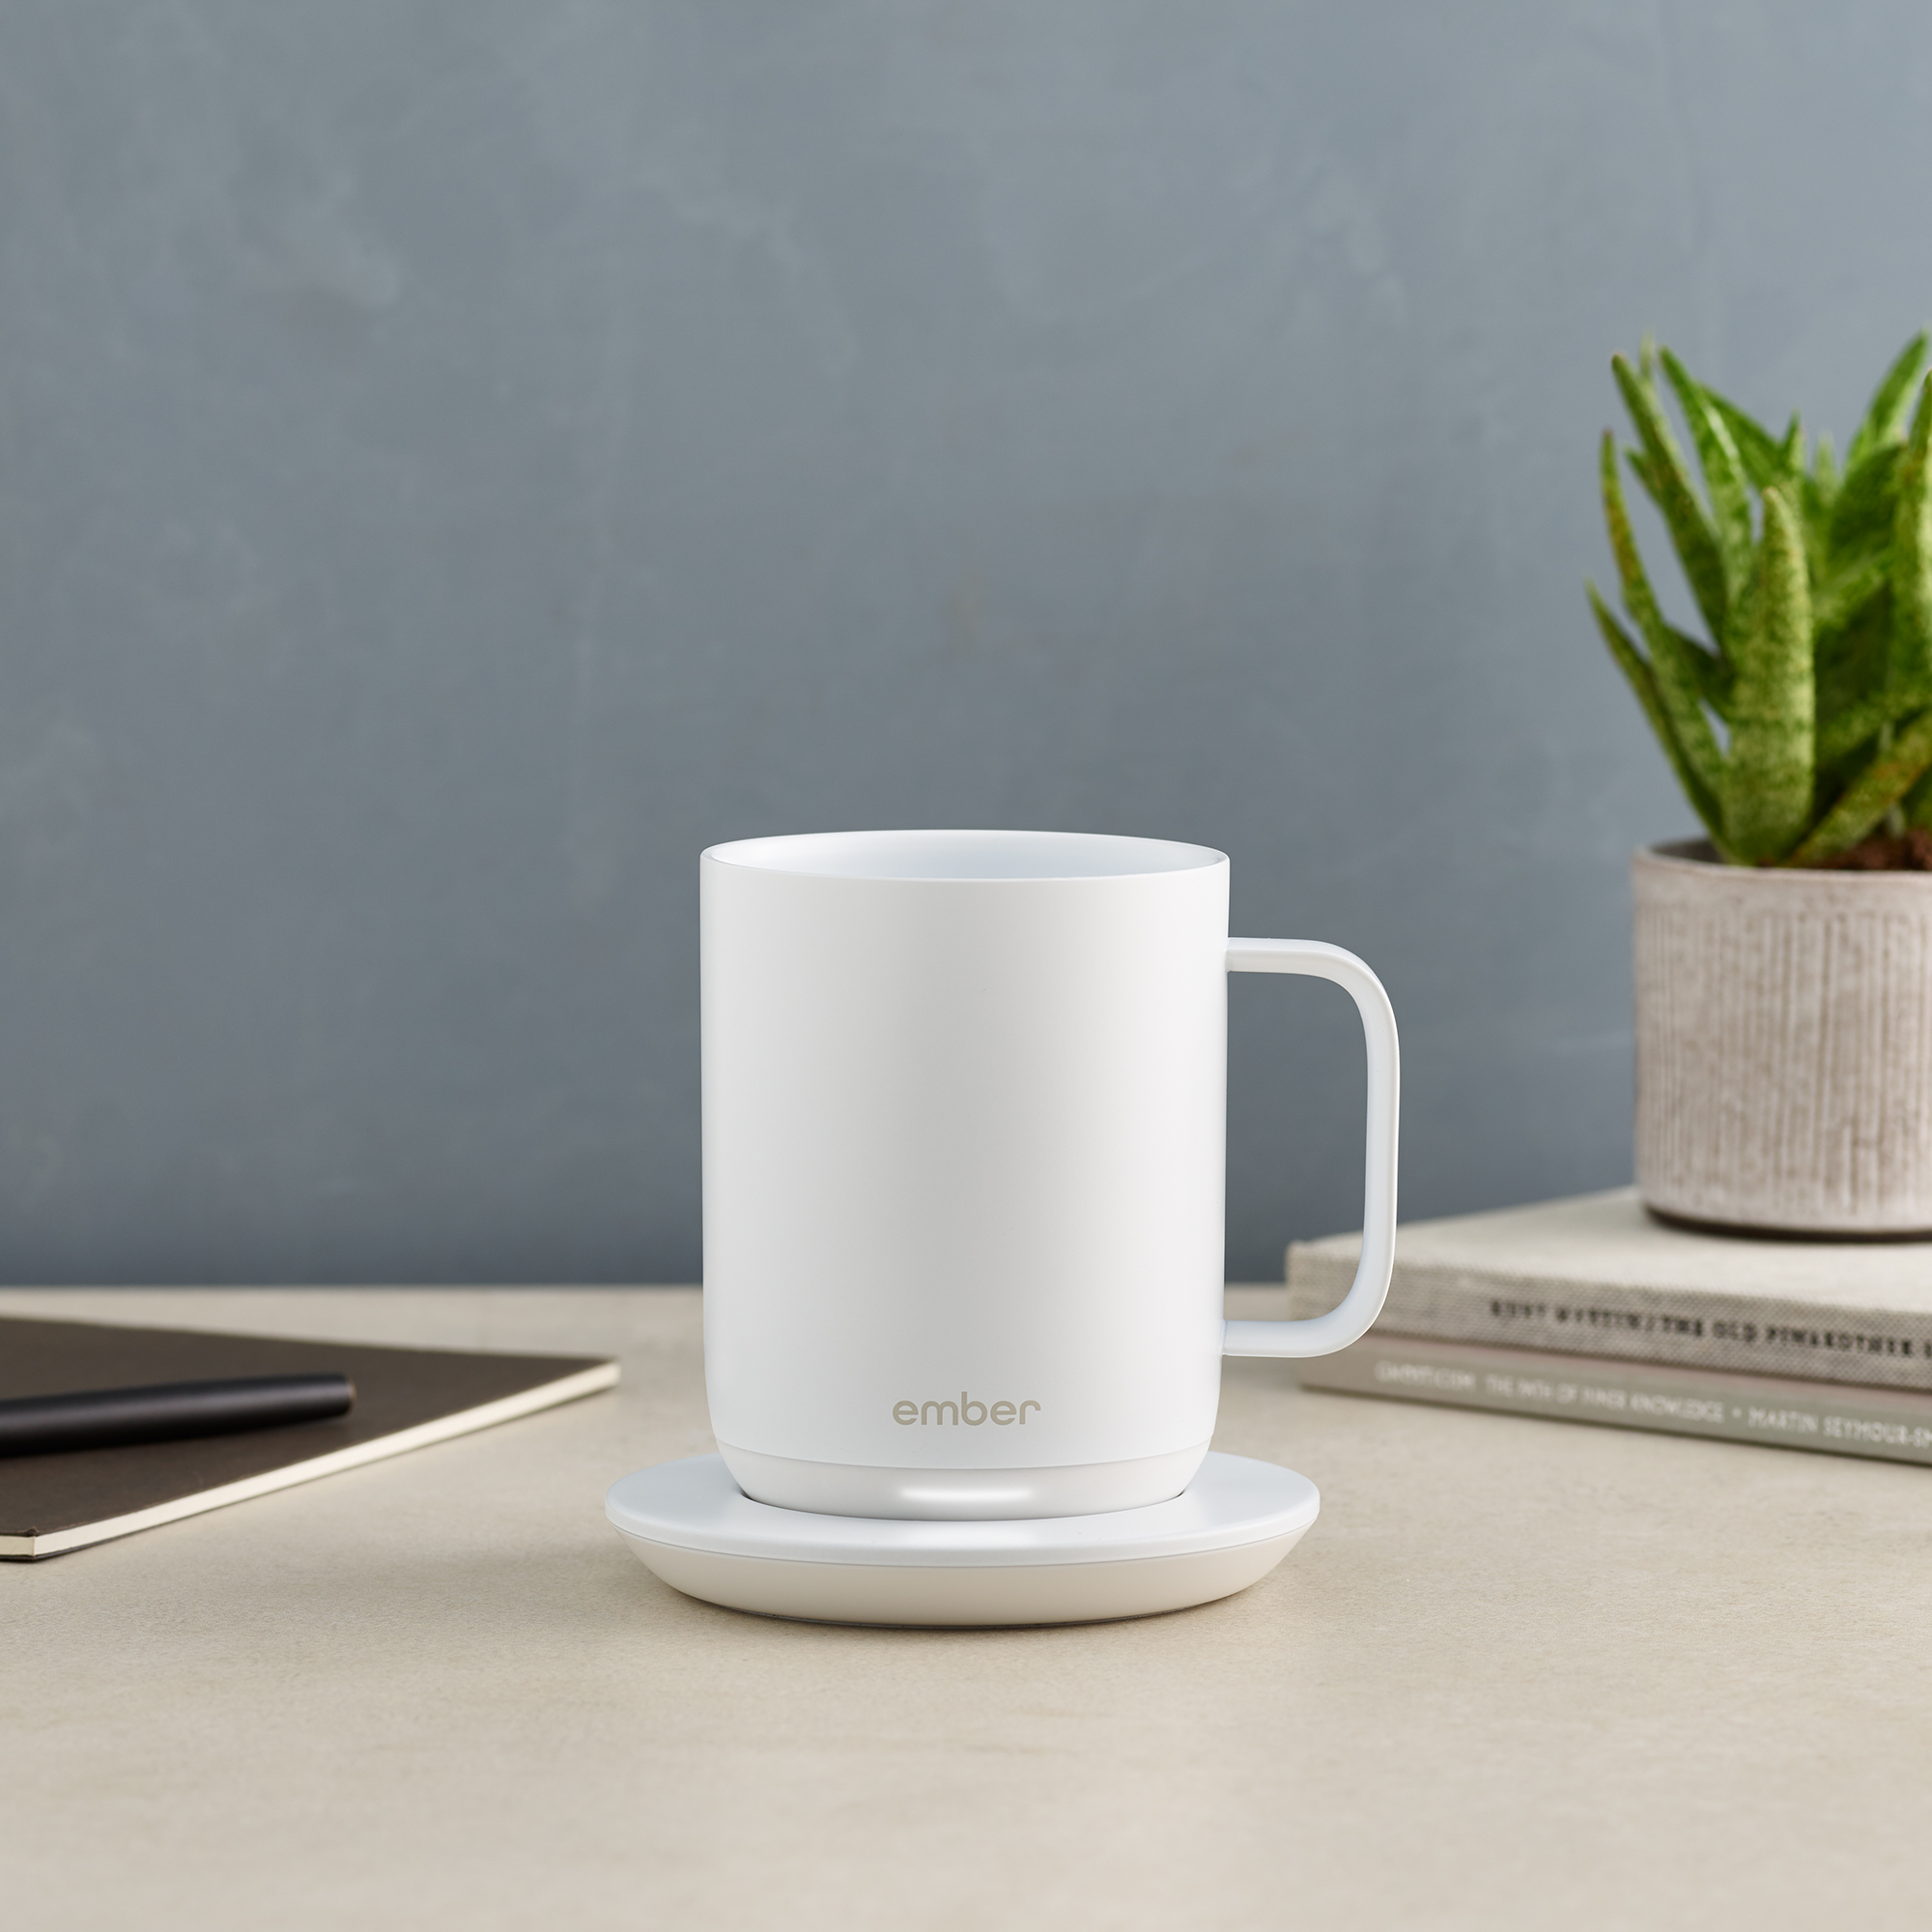 Ember Temperature Control Smart Mug 2, 10 oz, White, 1.5-hr Battery Life - App Controlled Heated Coffee Mug - Improved Design - image 5 of 9